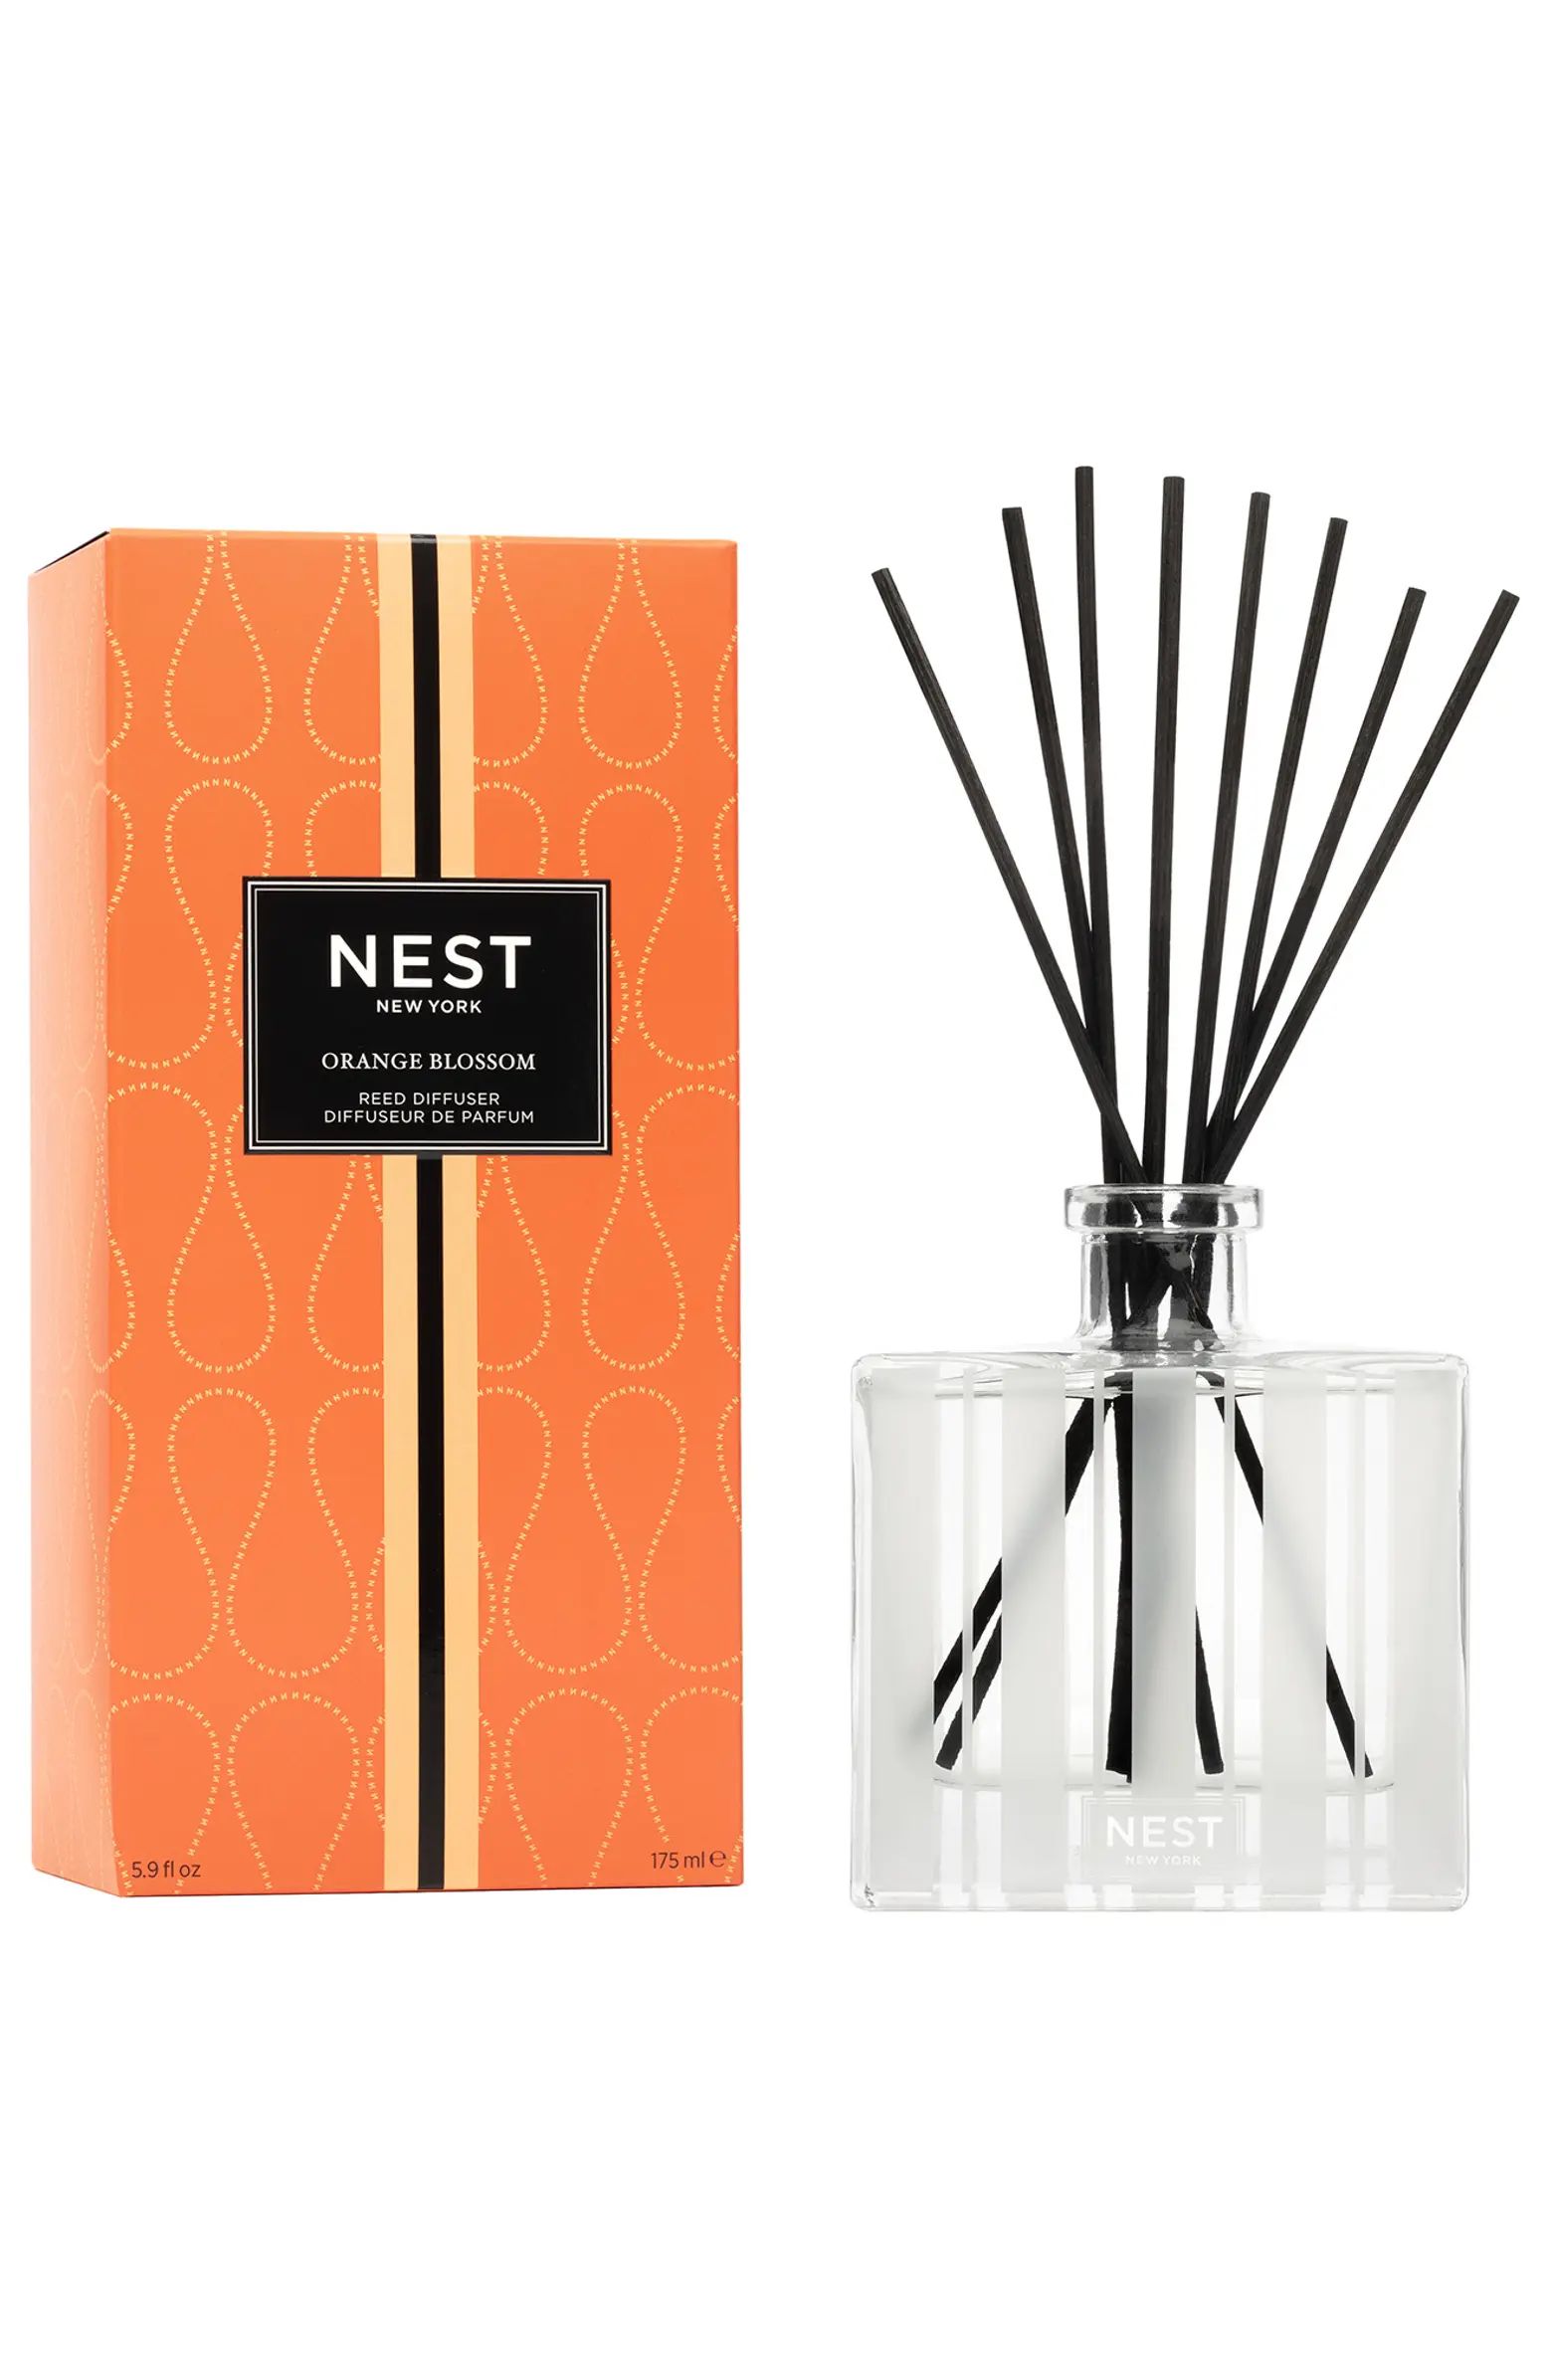 NEST Orange Blossom Reed Diffuser | Nordstrom Rack